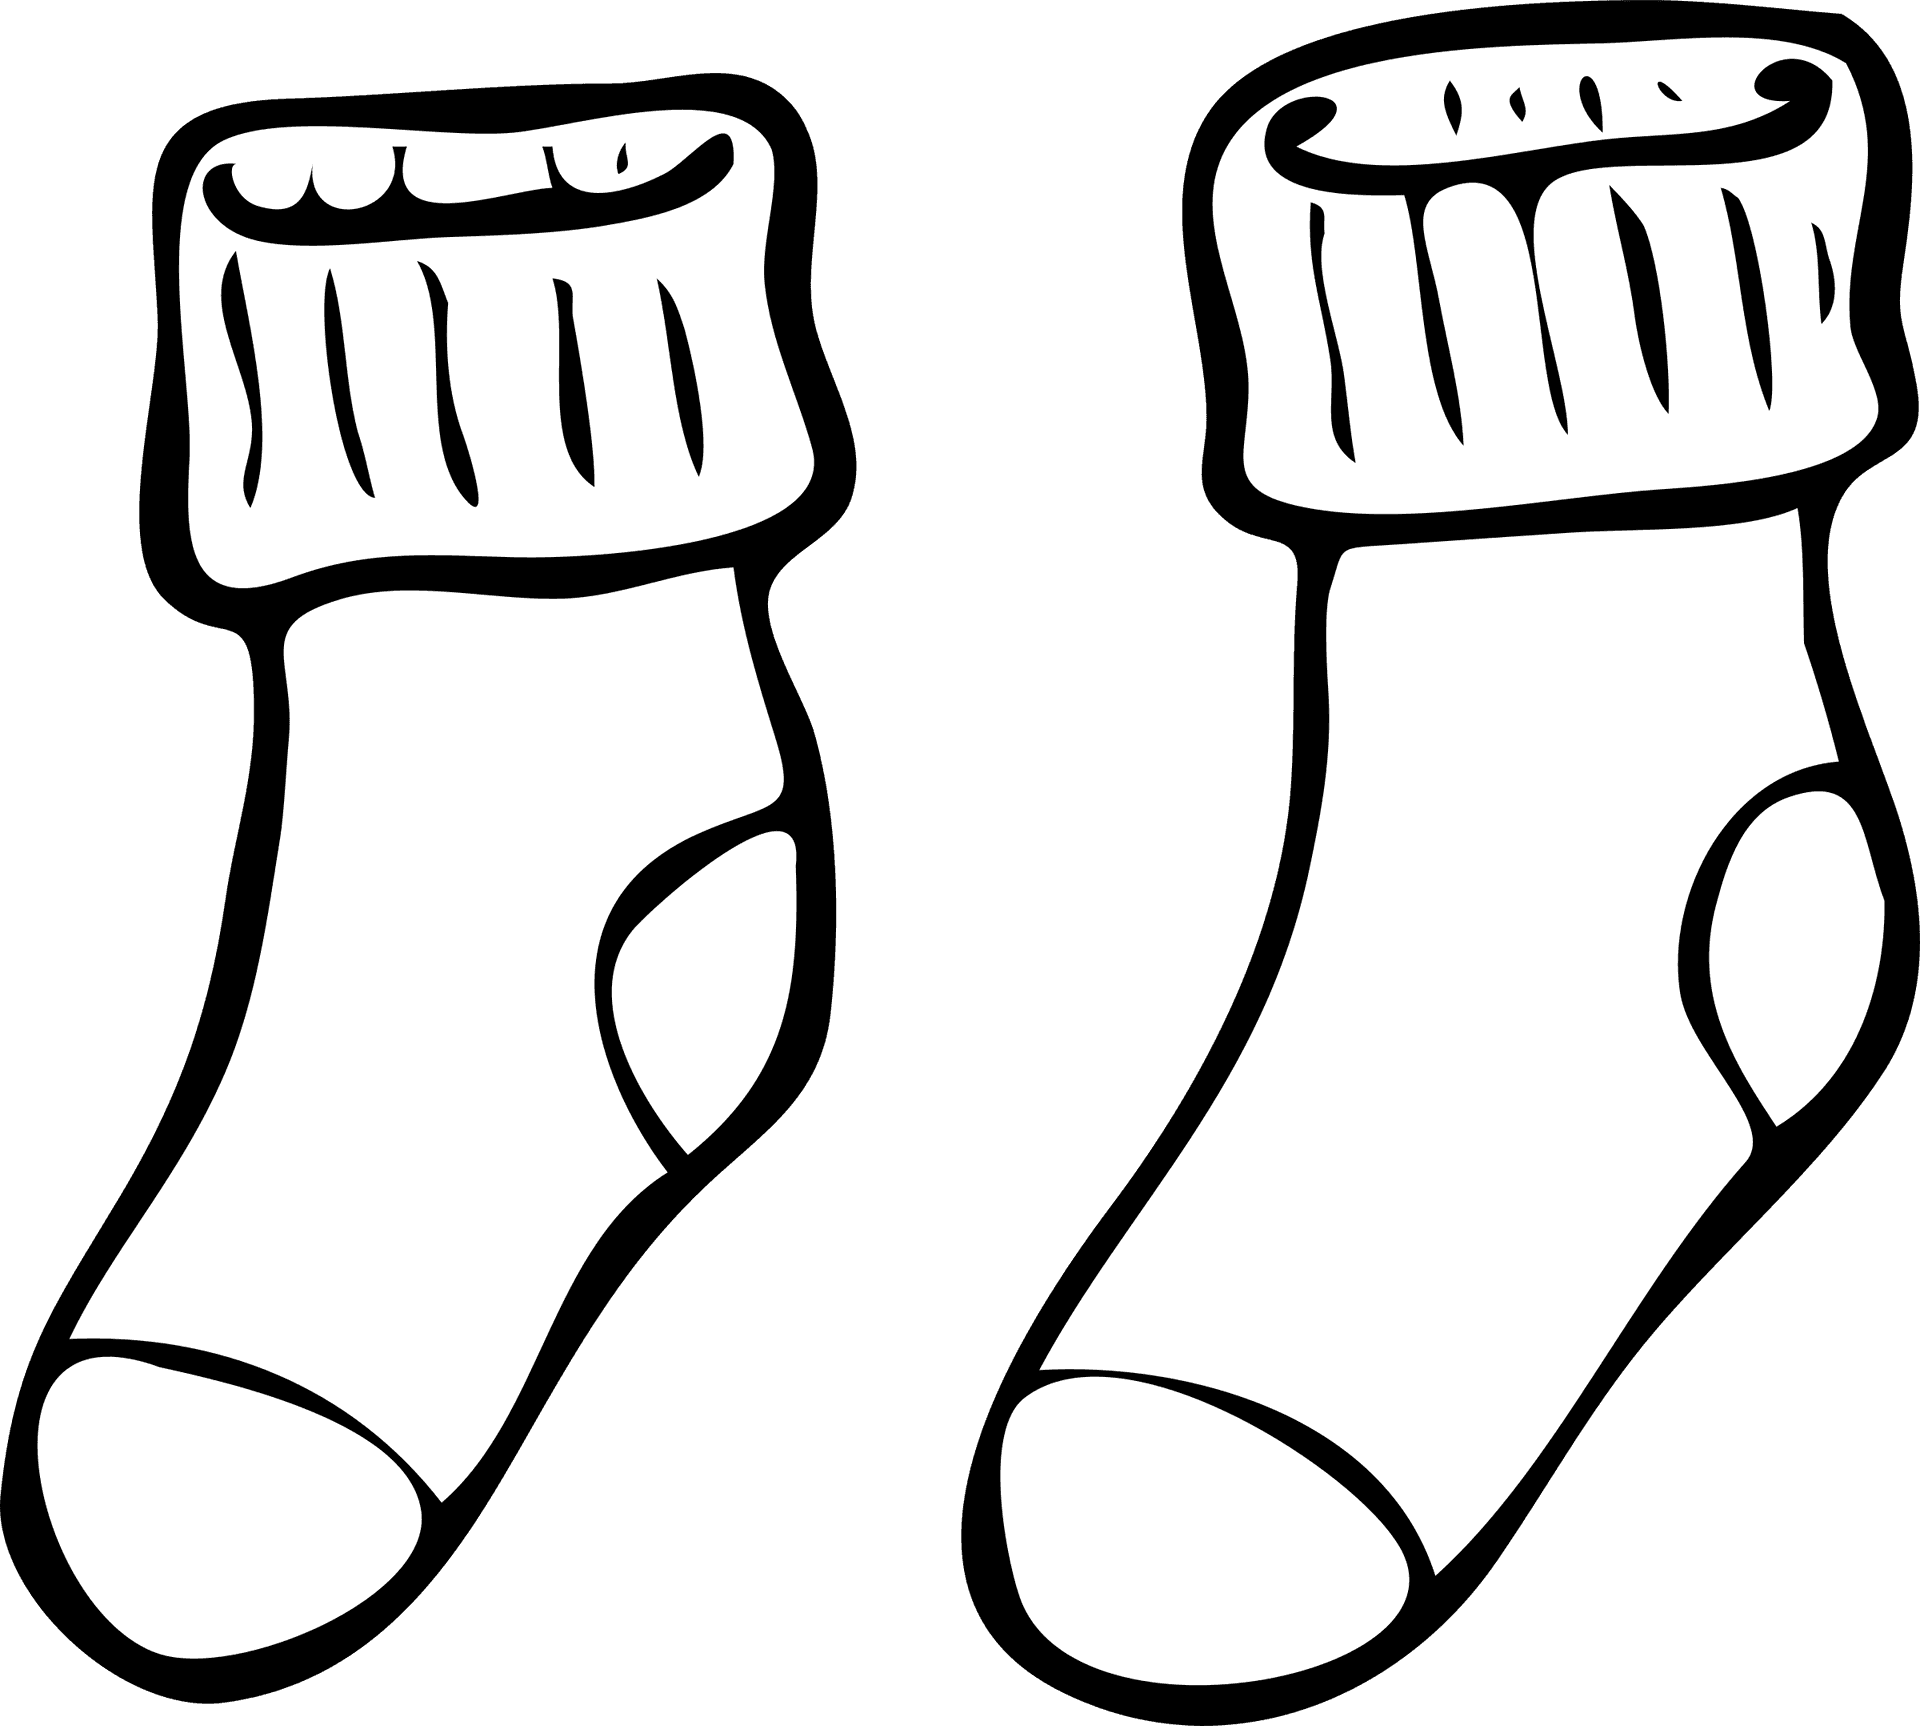 Pairof White Socks Illustration PNG image